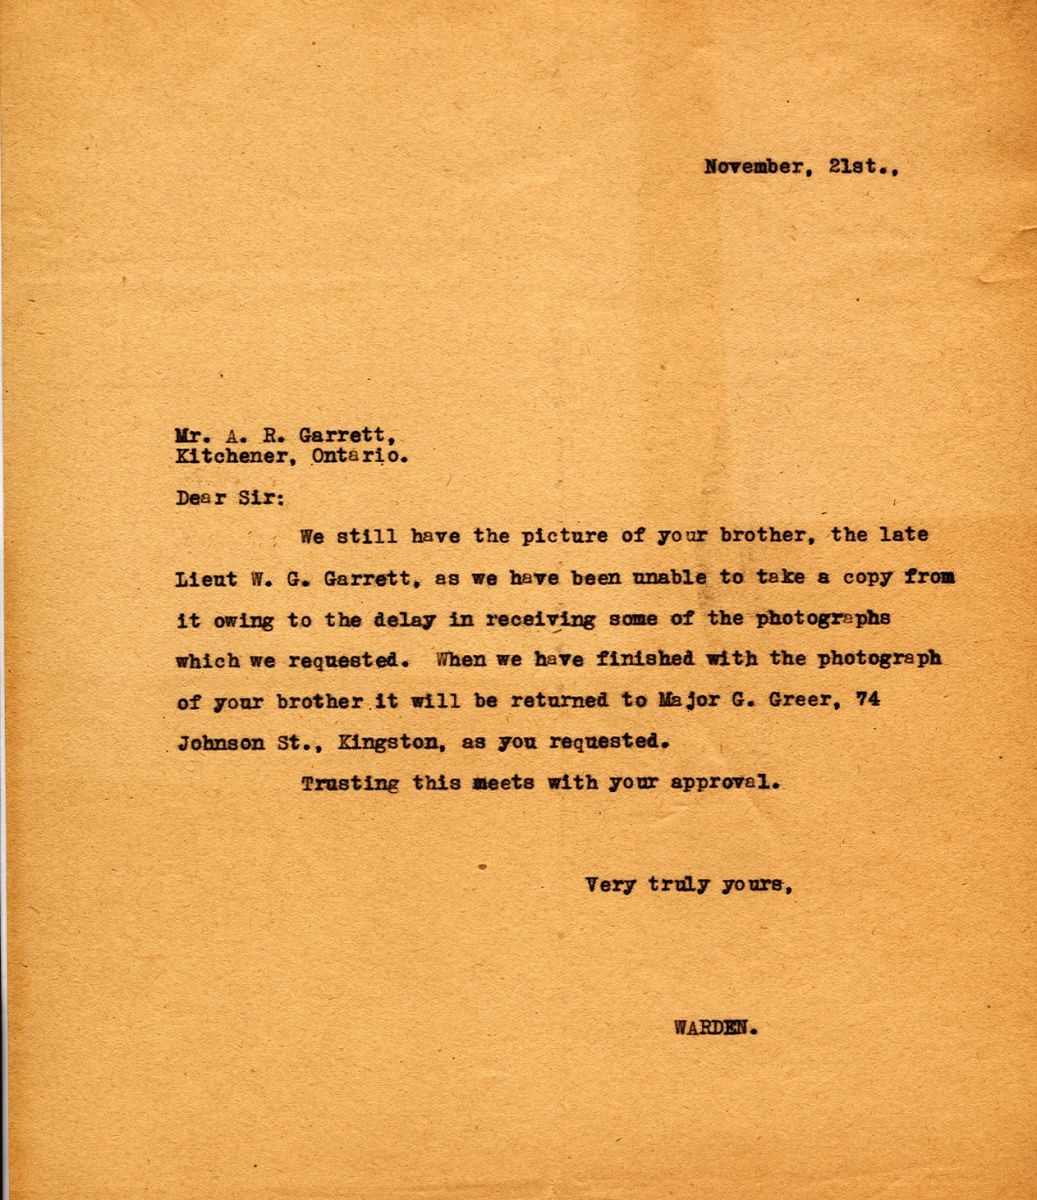 Letter from the Warden to Mr. A.R. Garrett, 21st November